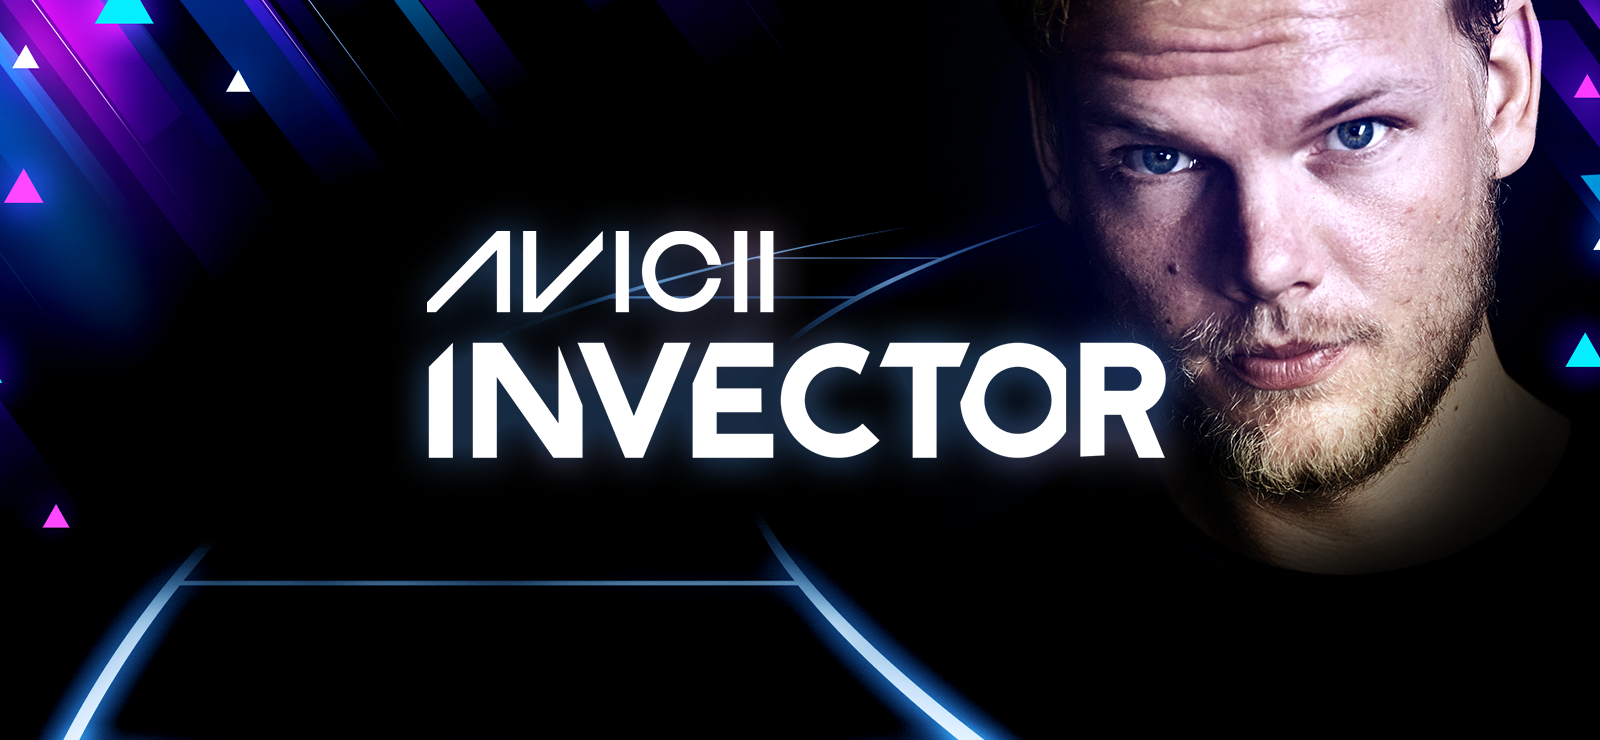 AVICII Invector - TIM Track Pack